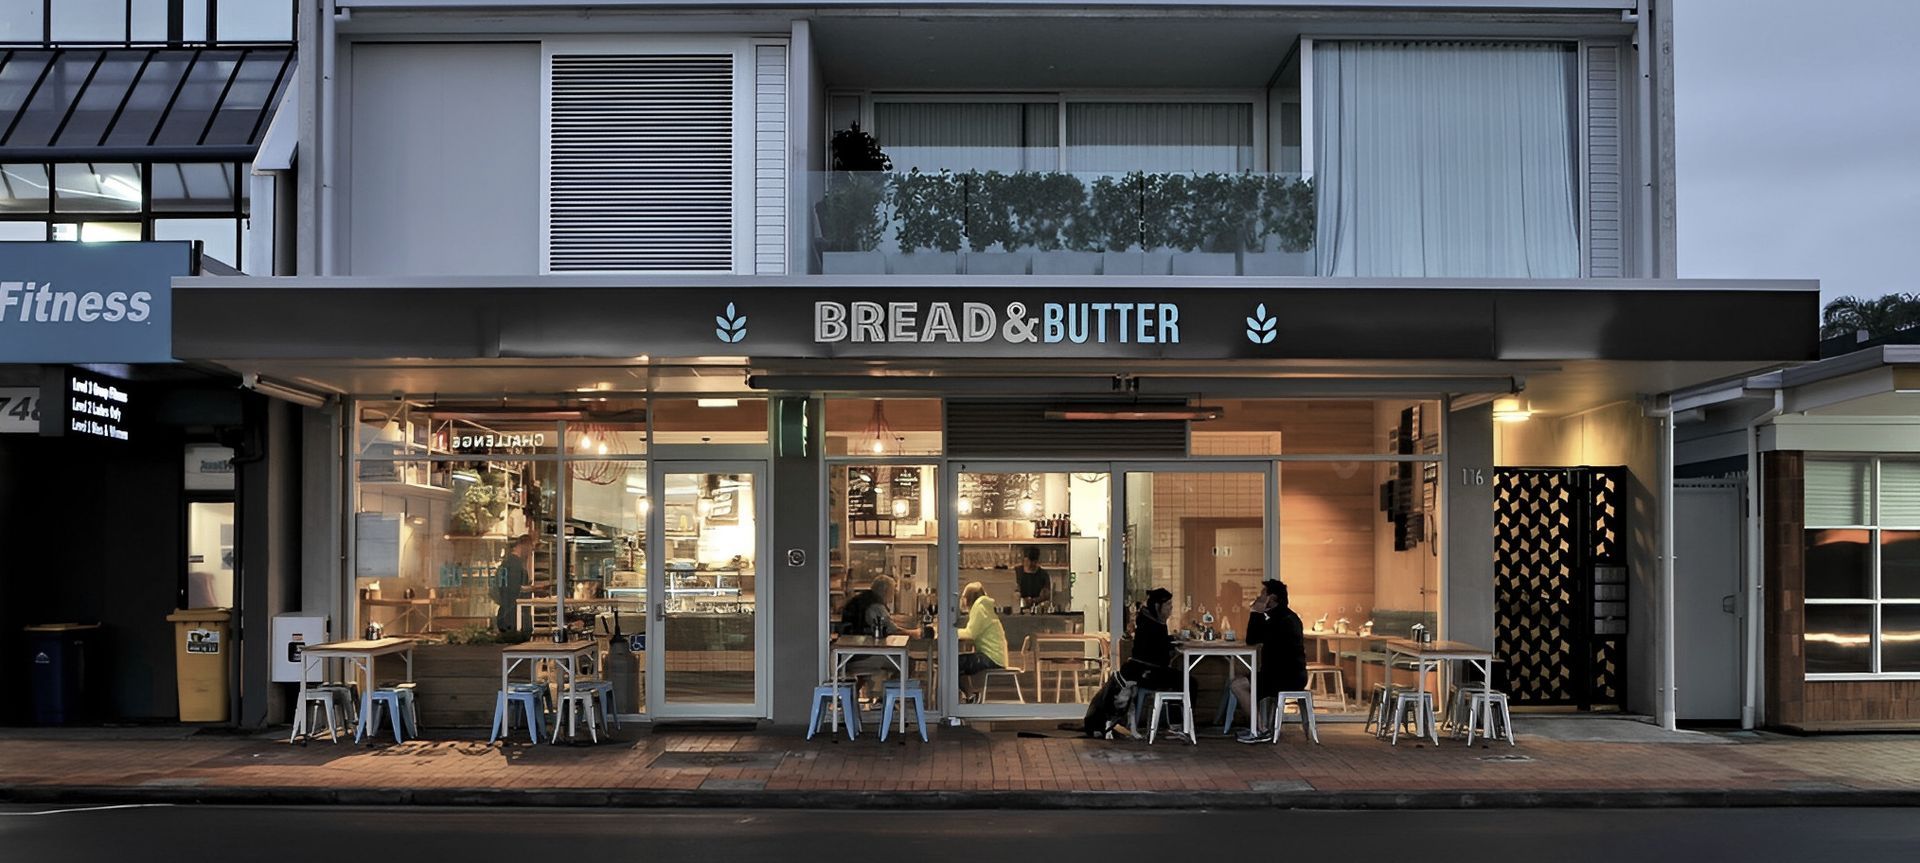 Bread & Butter - Milford banner